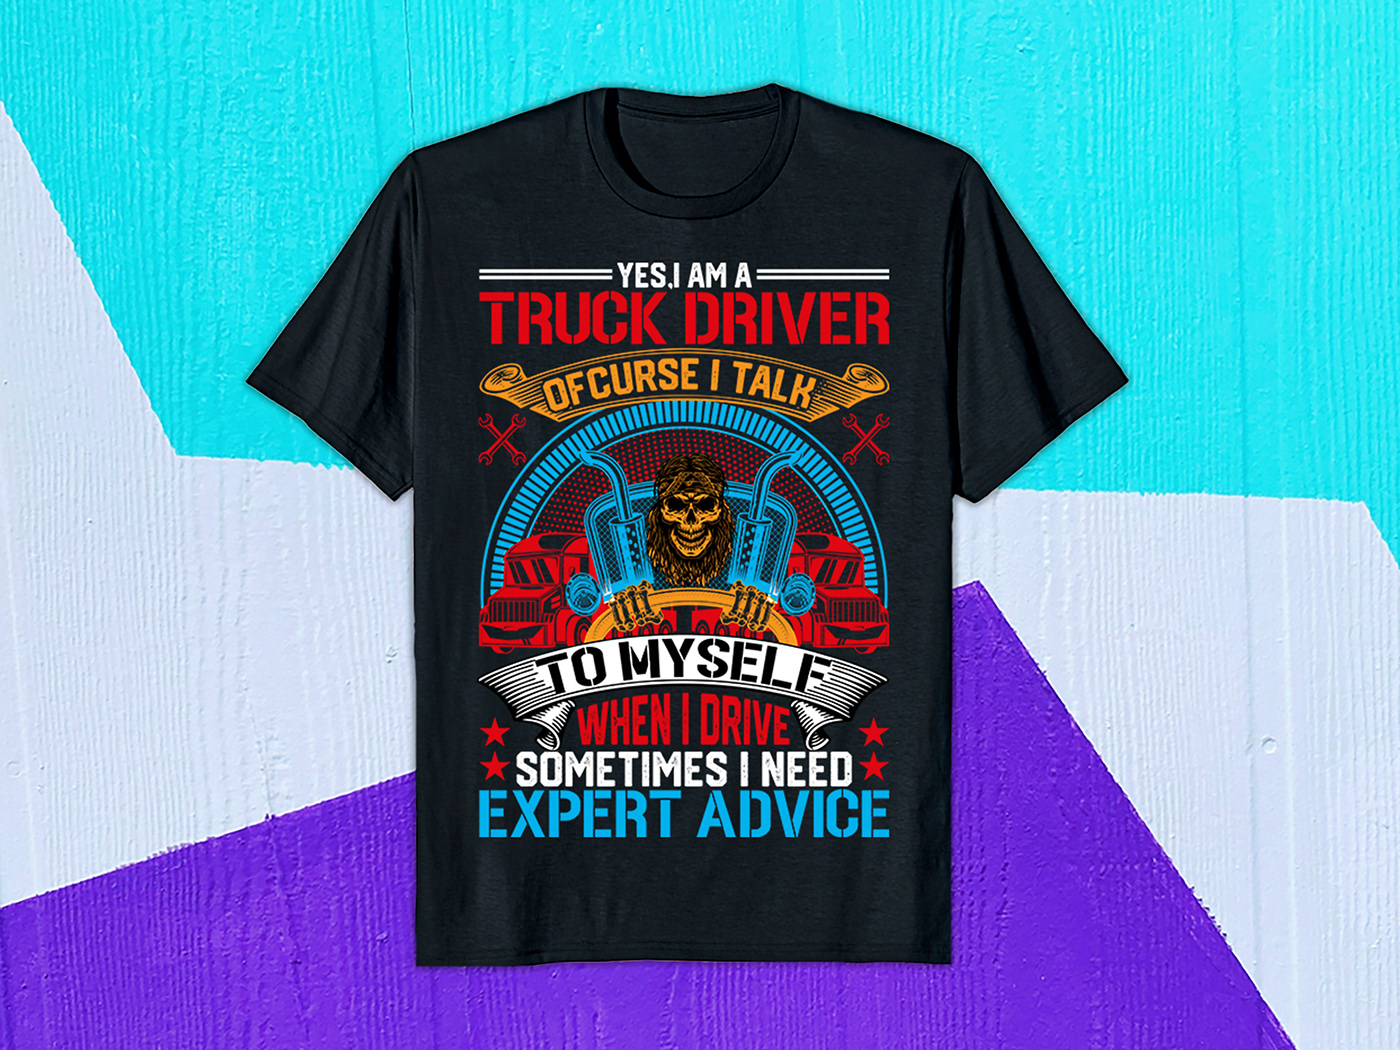 apparel Clothing custom t-shirt design Driving driving t-shirt T-Shirt Design Truck truck driver t-shirt truck t-shirt tshirt